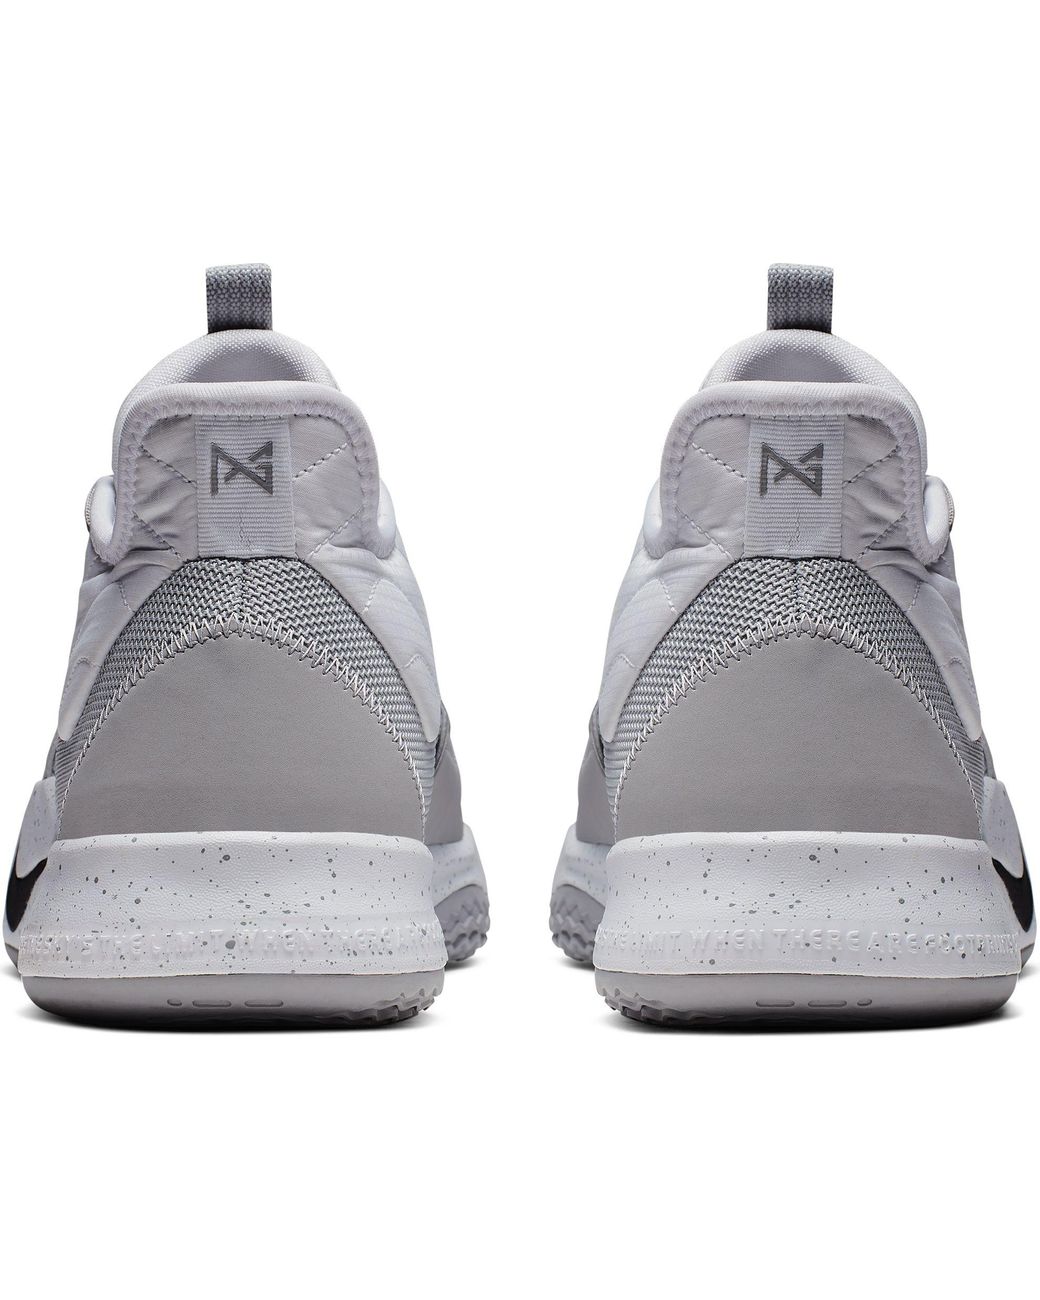 Nike Pg3 Basketball Shoes in Grey/Black 